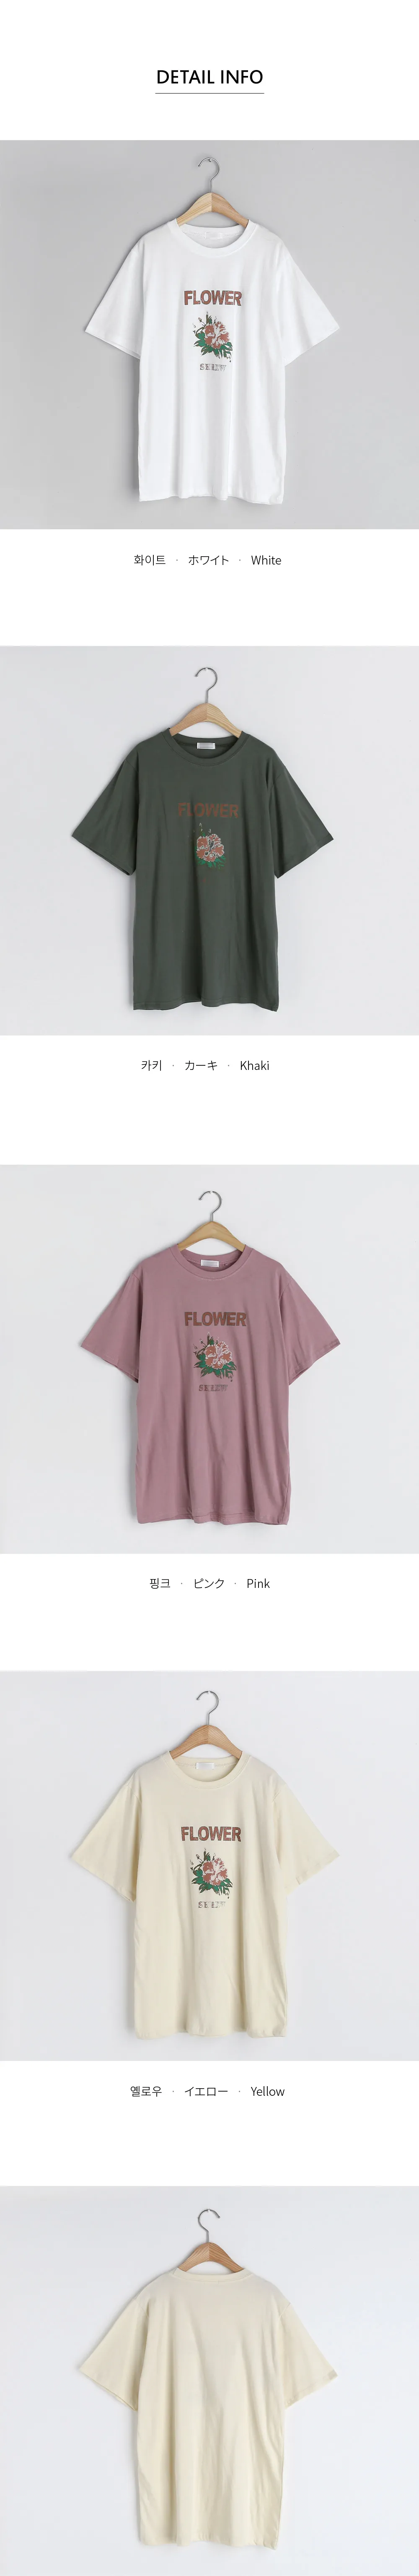 FLOFWERプリントTシャツ・全4色 | DHOLIC | 詳細画像10